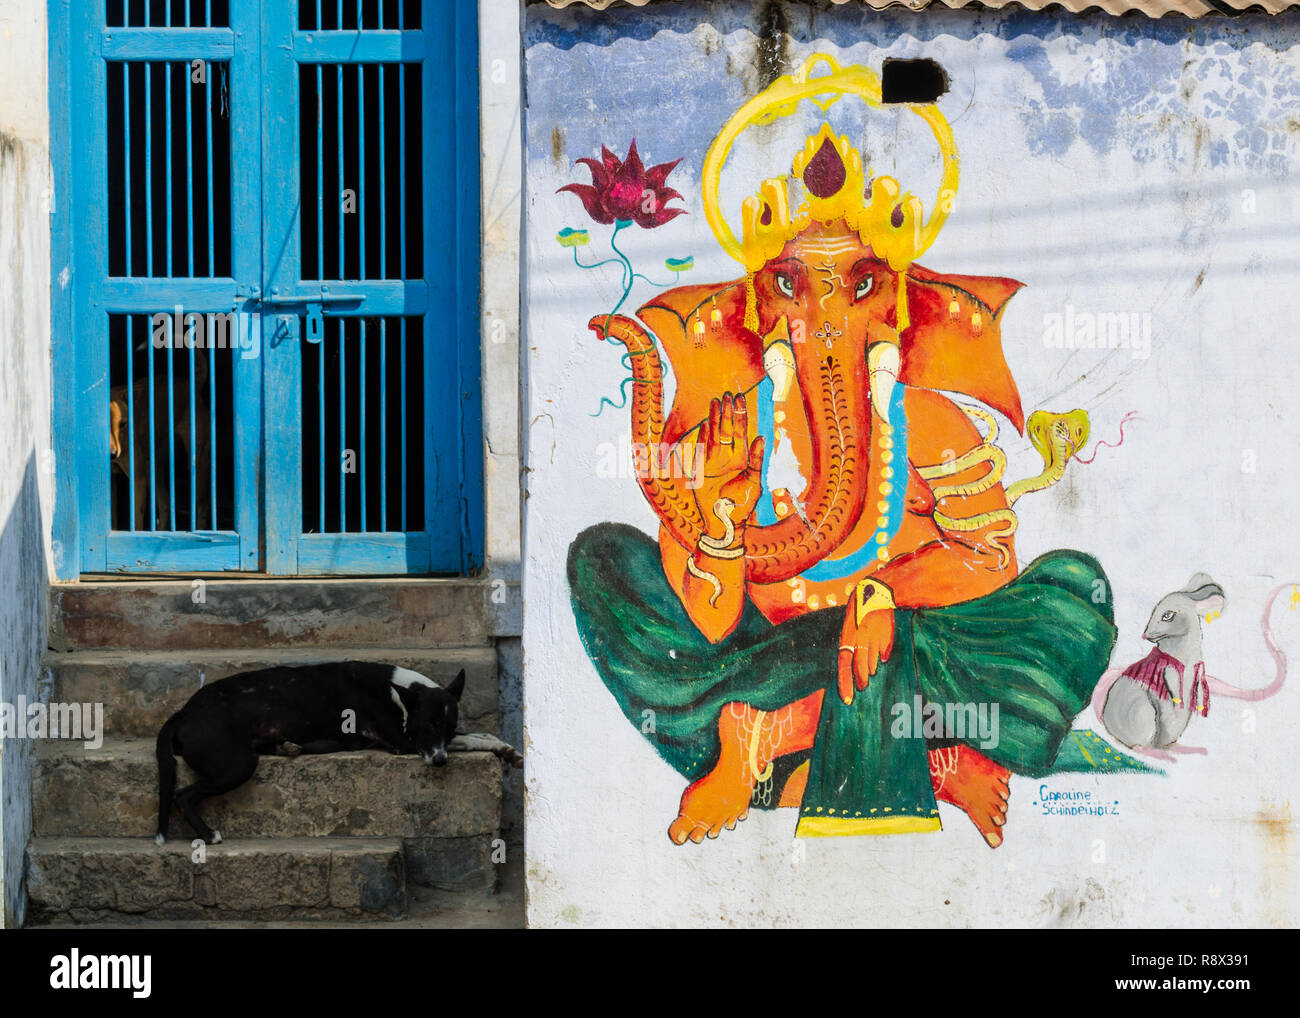 Stray dog sleeping on the steps next to a Ganesha mural painting, Varanasi, Uttar Pradesh, India Stock Photo